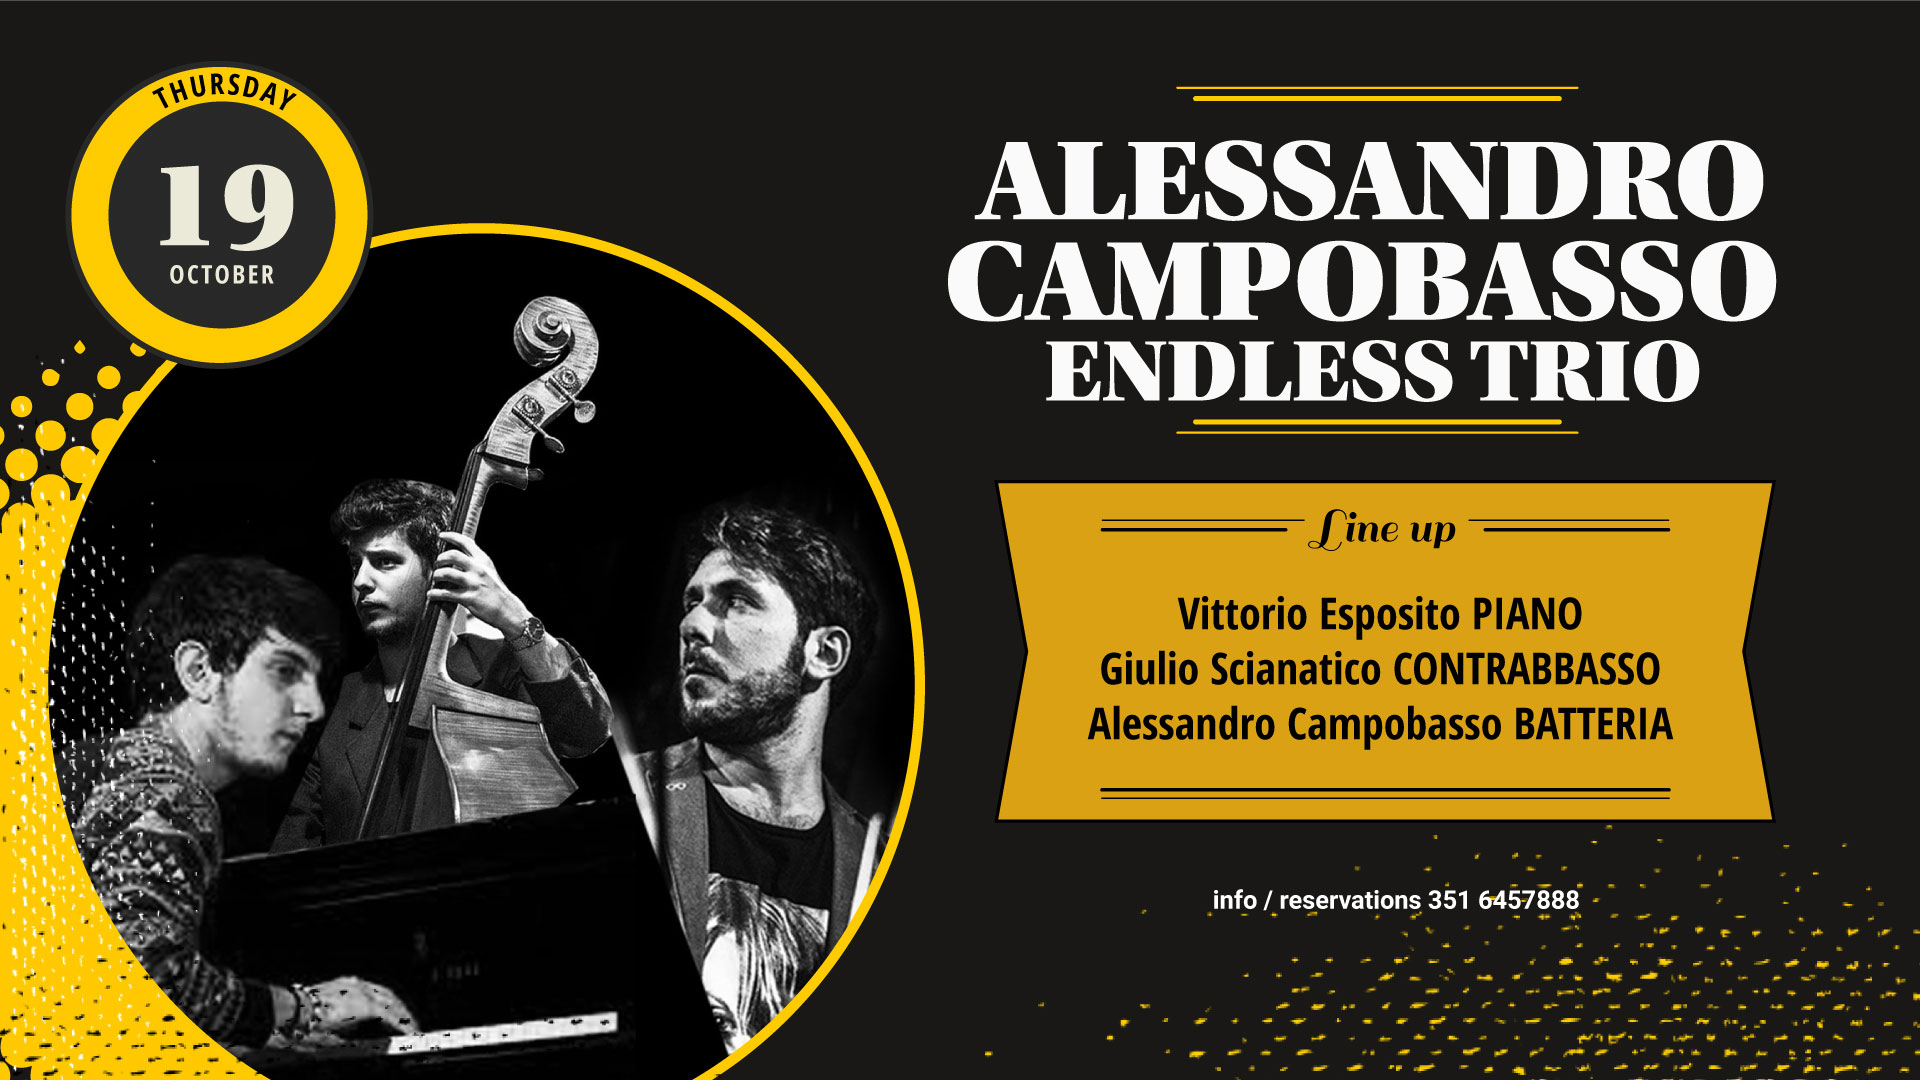 Alessandro Campobasso Endless trio